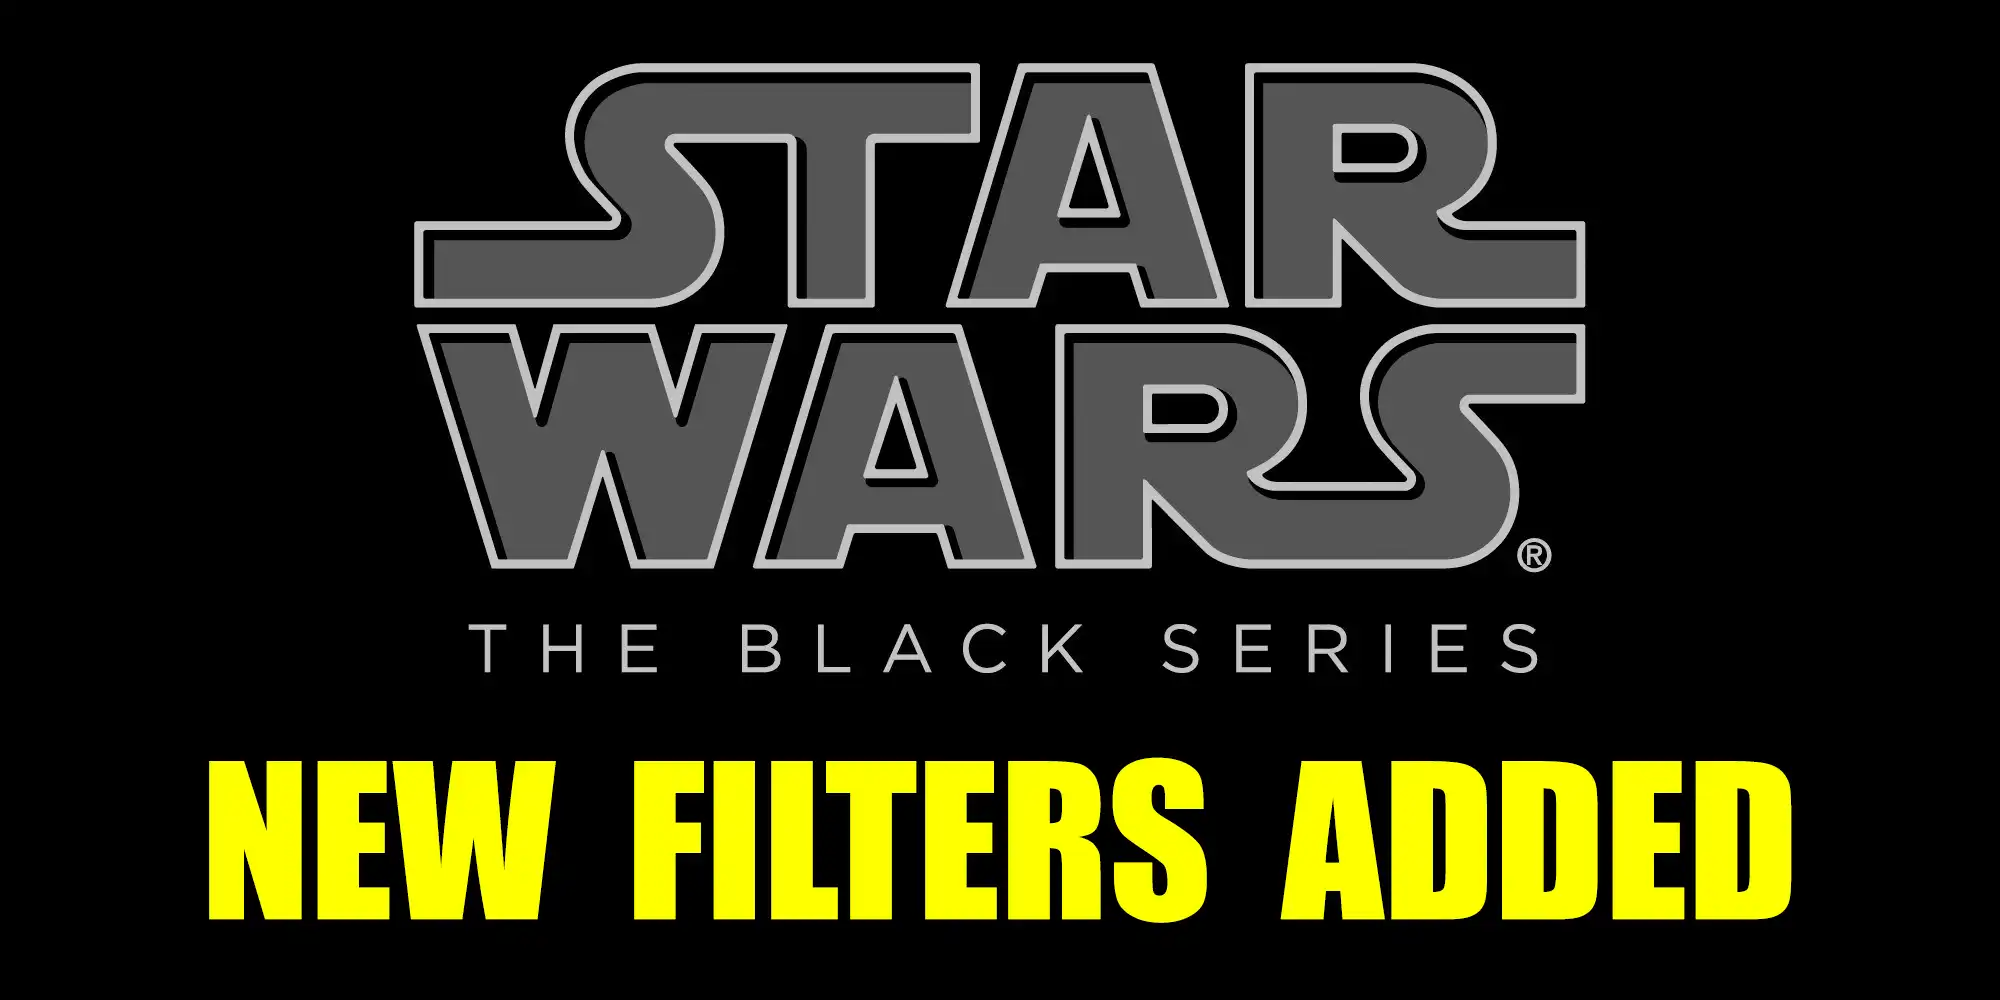 Black Series Filter Update